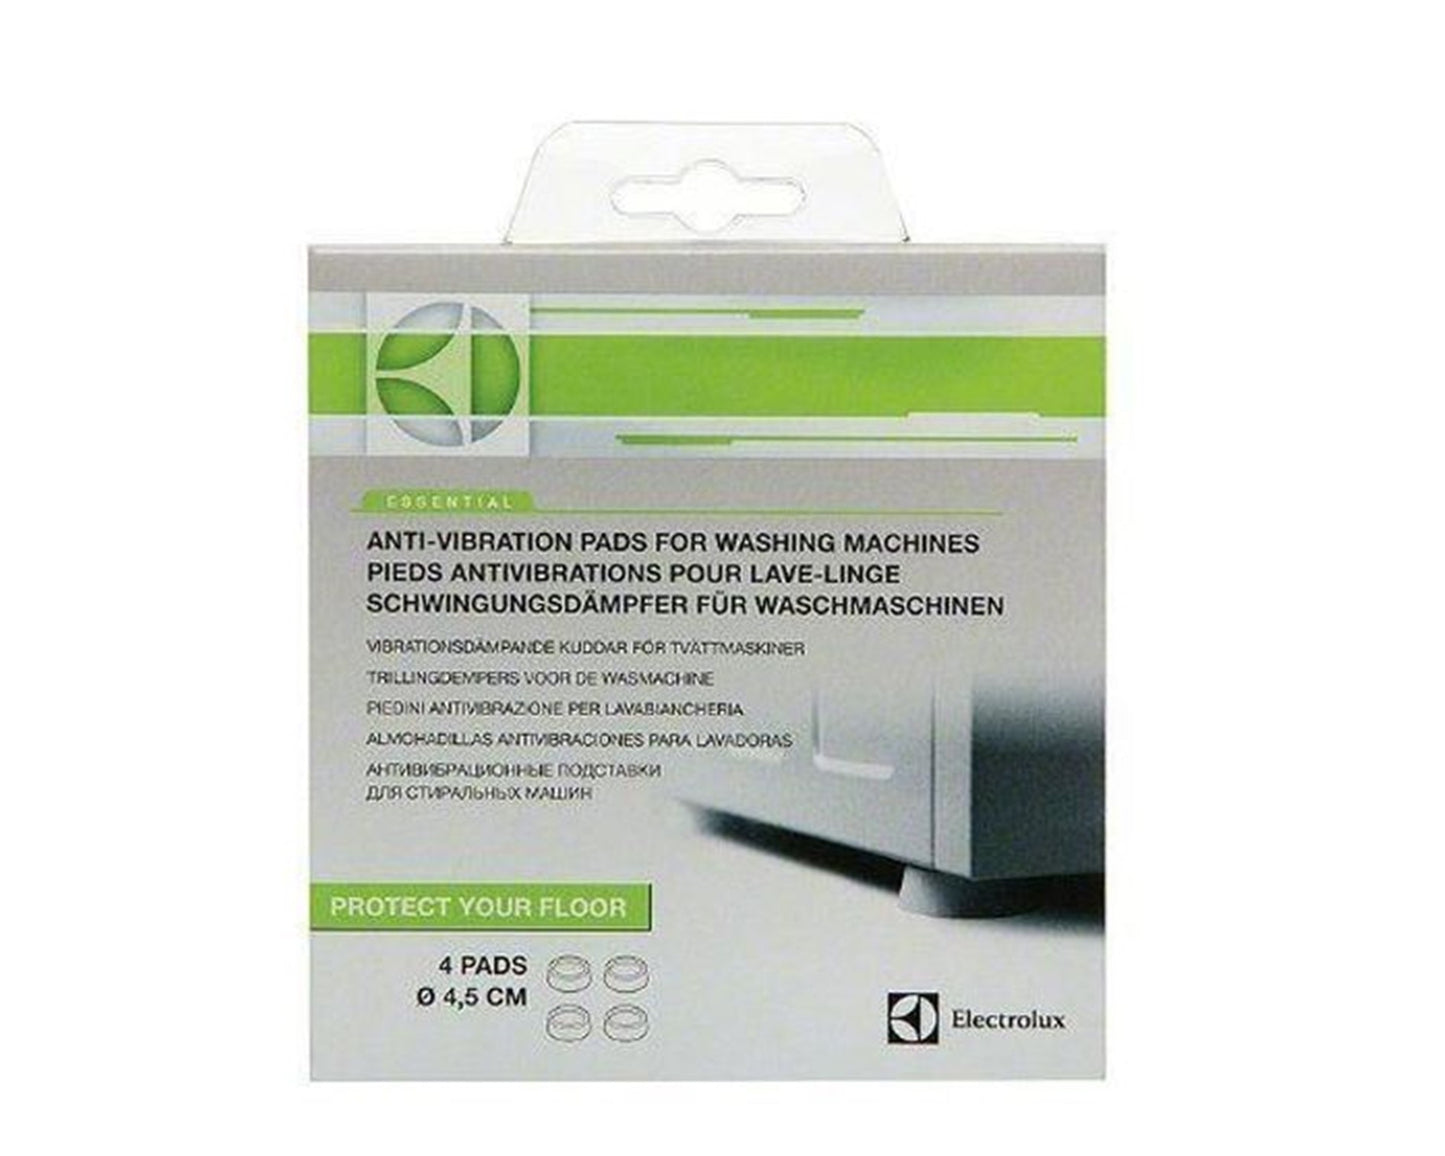 Genuine Electrolux Anti Vibration Pads for Washing Machines